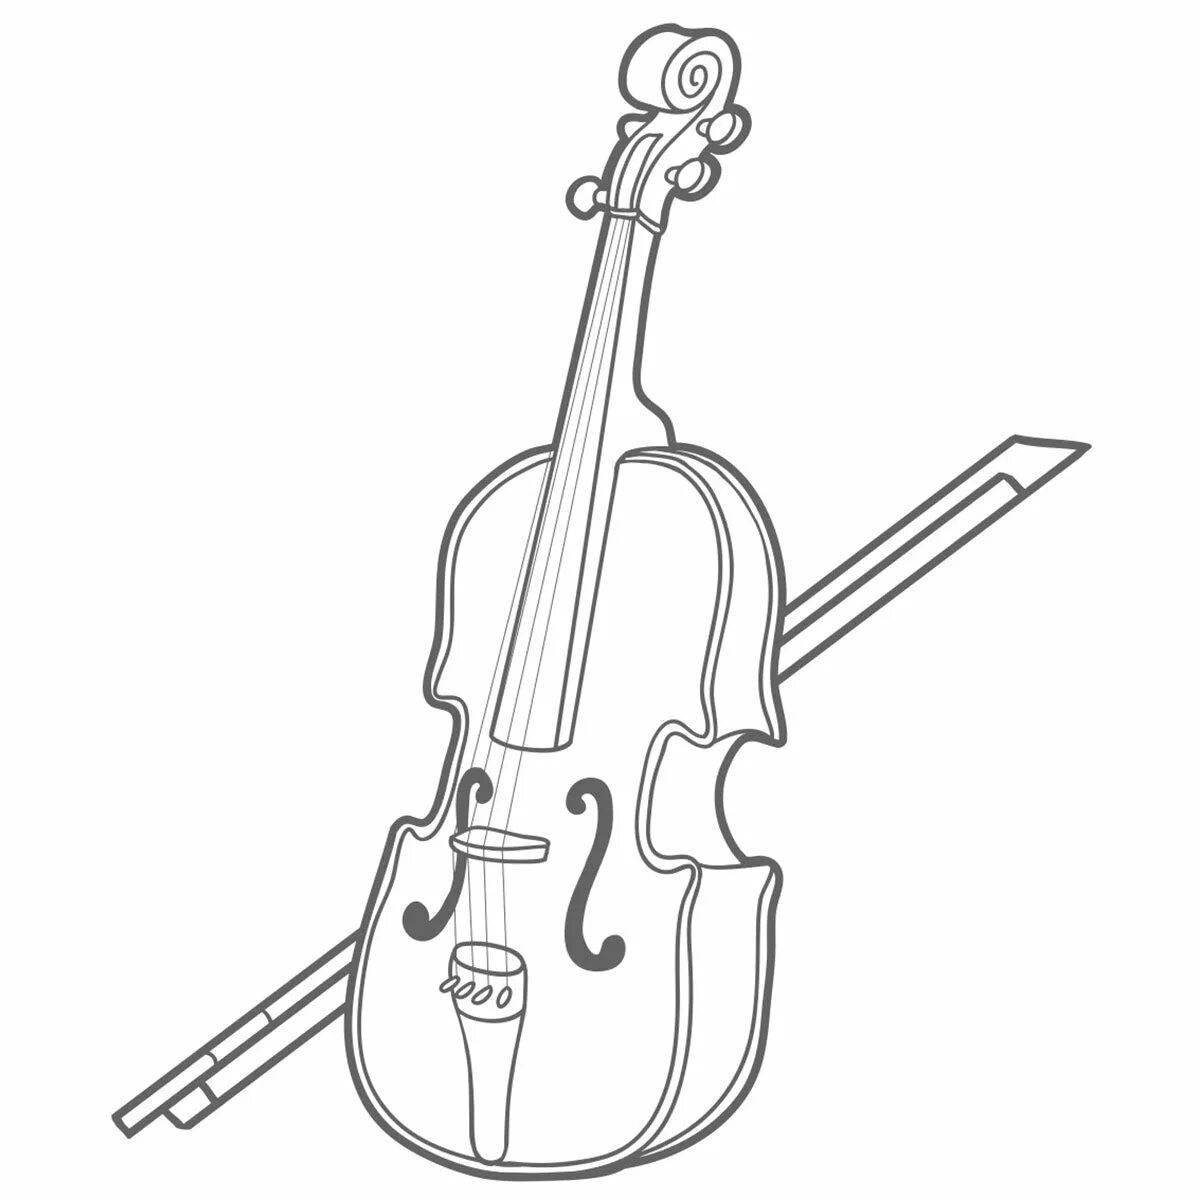 Great violin and cello coloring book